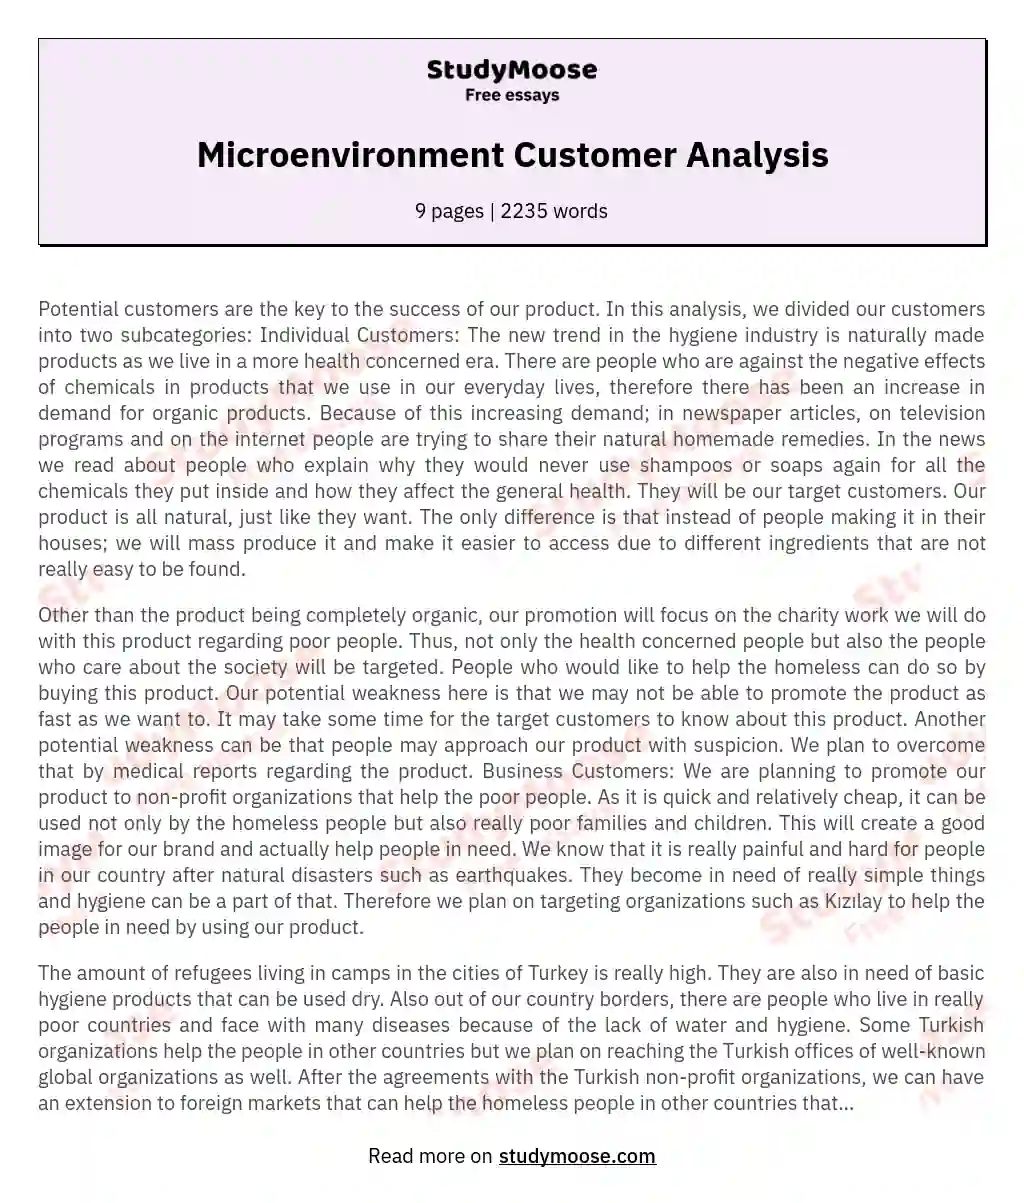 Microenvironment Customer Analysis essay